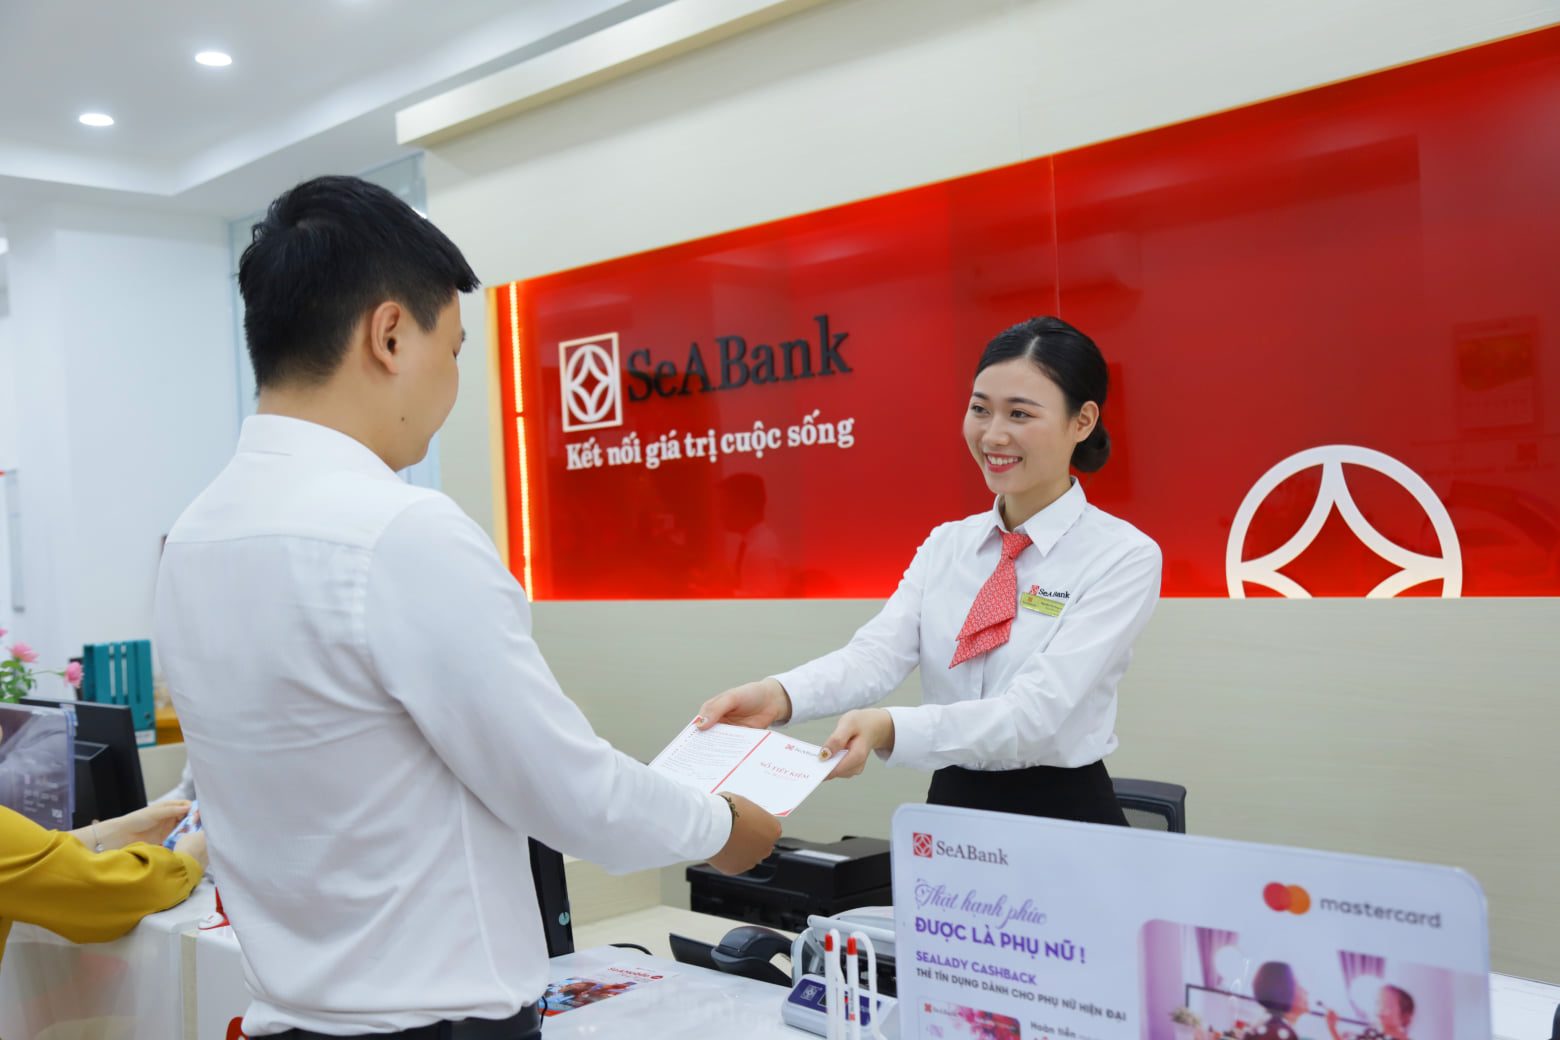 IFC proposes up to $100m senior loan to Vietnam lender SeABank